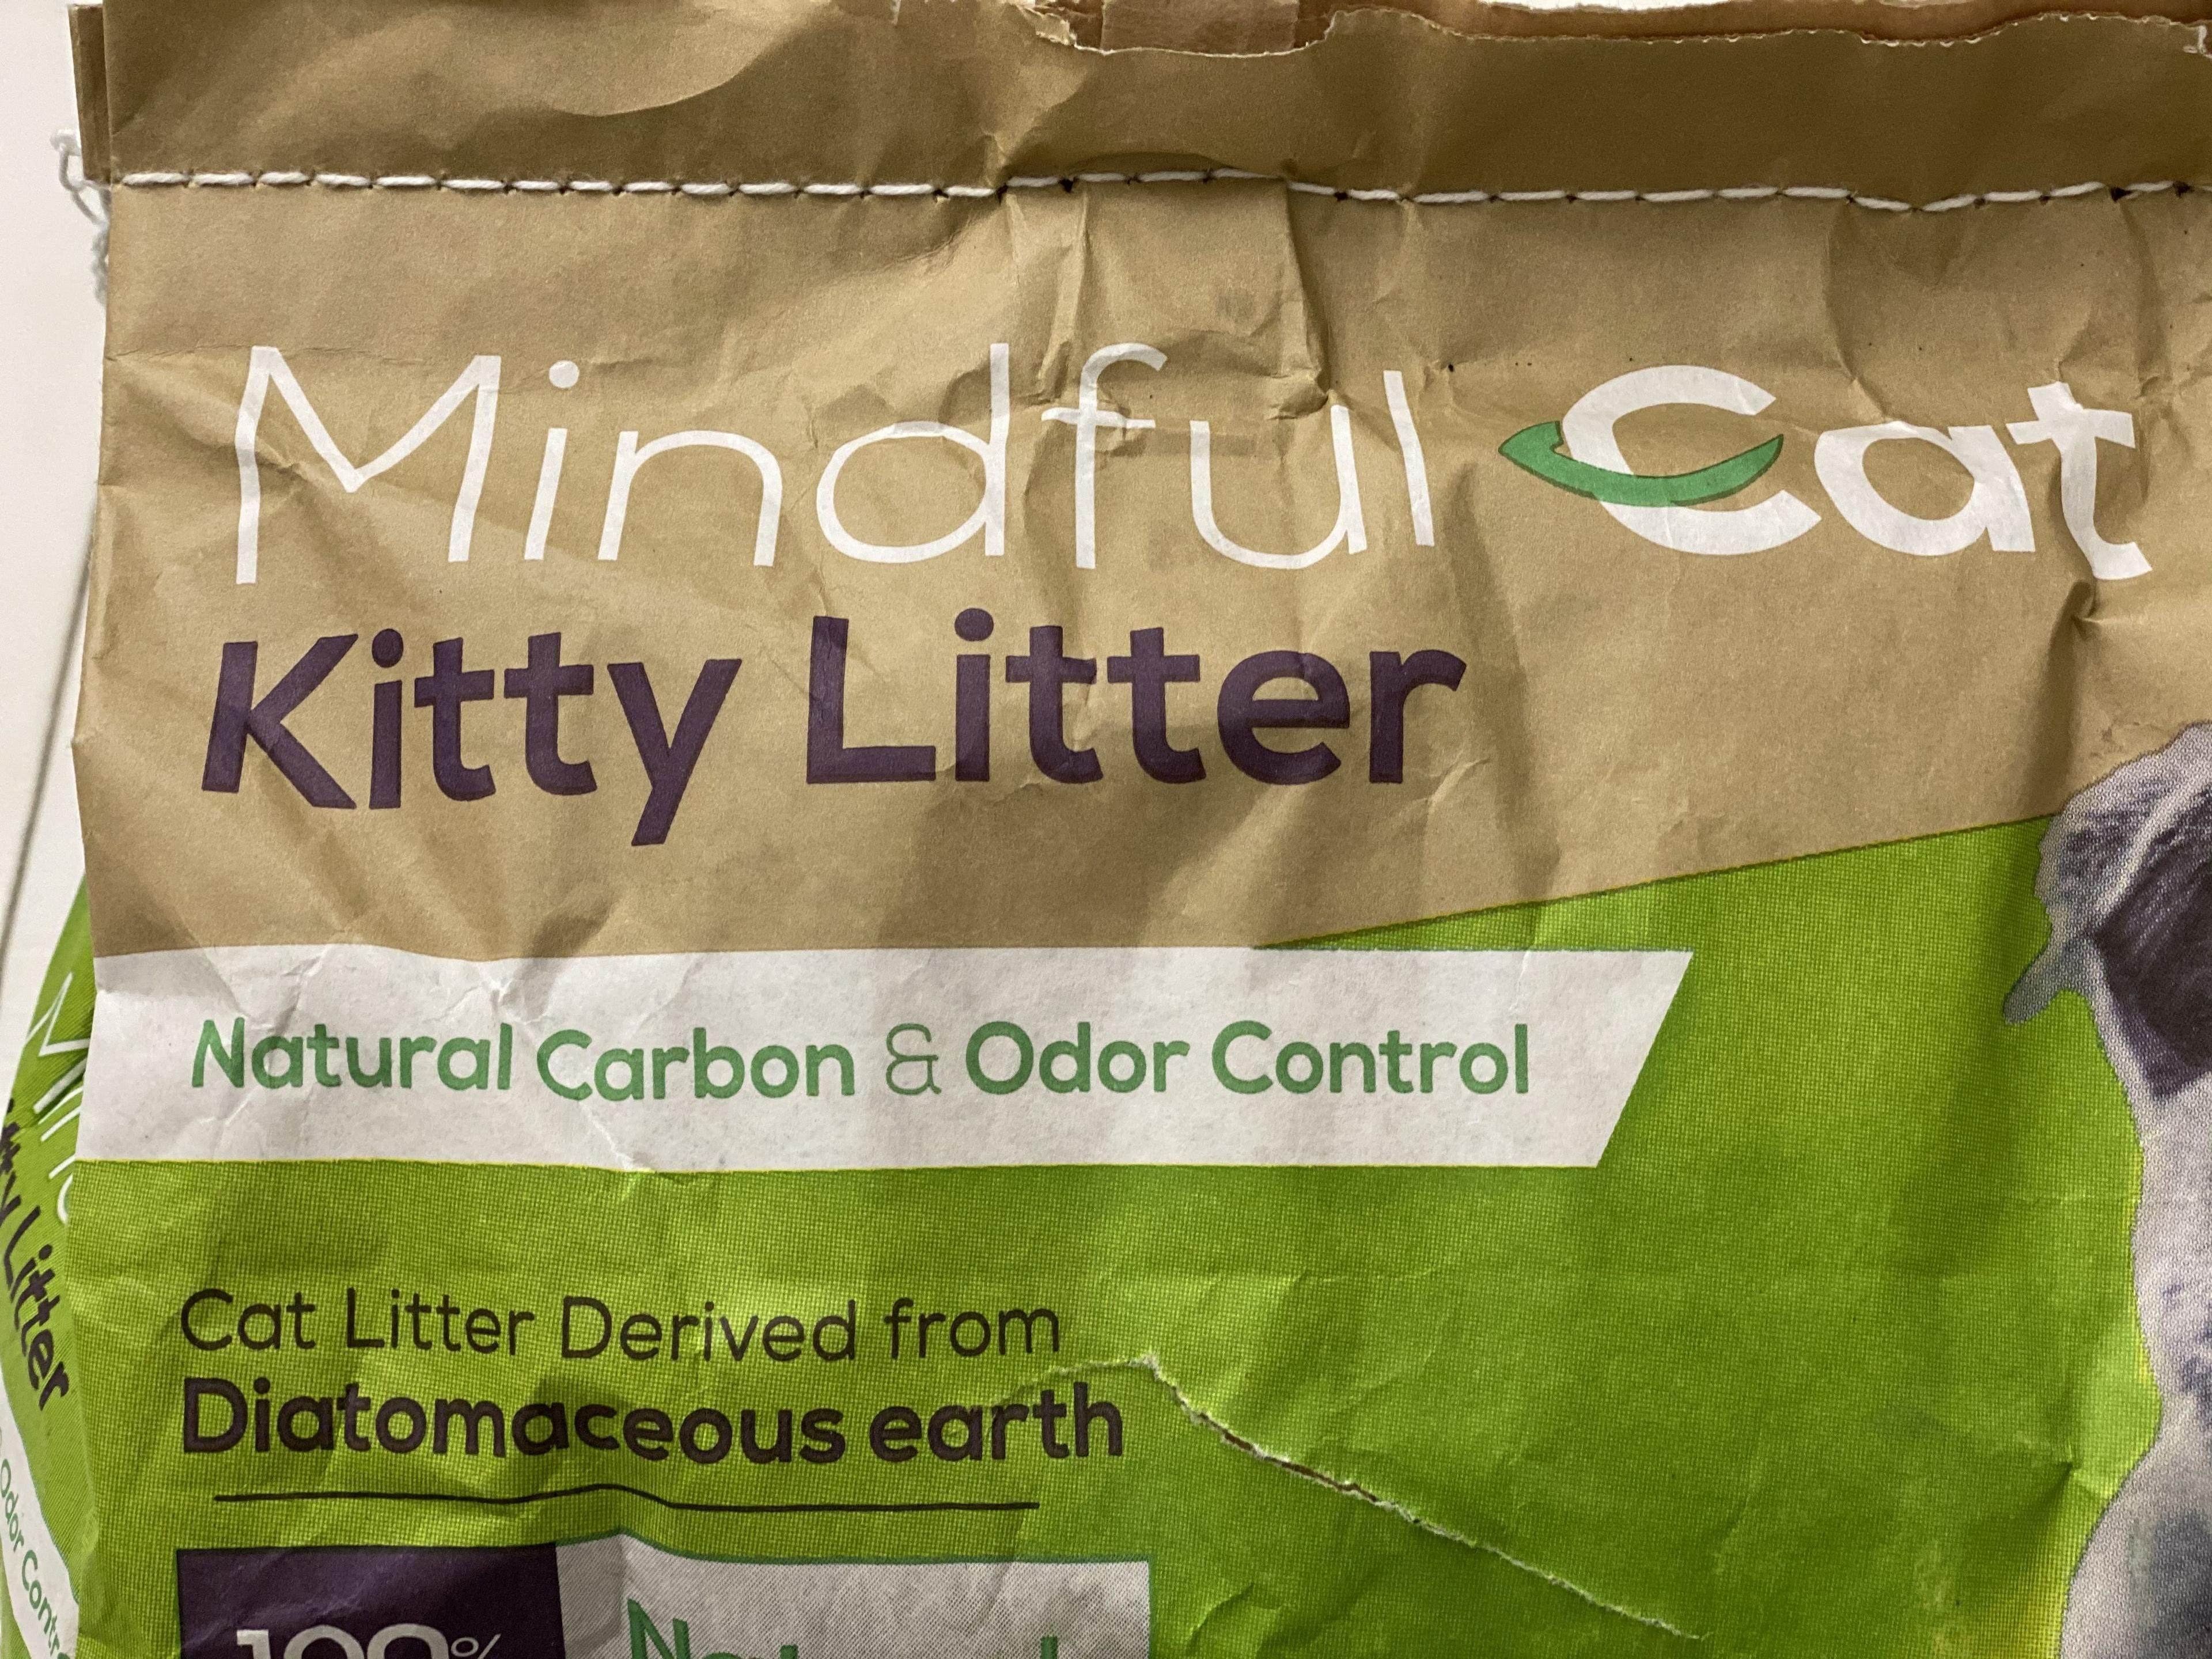 Mindful Cat Kitty Litter 10 LBS. Bag